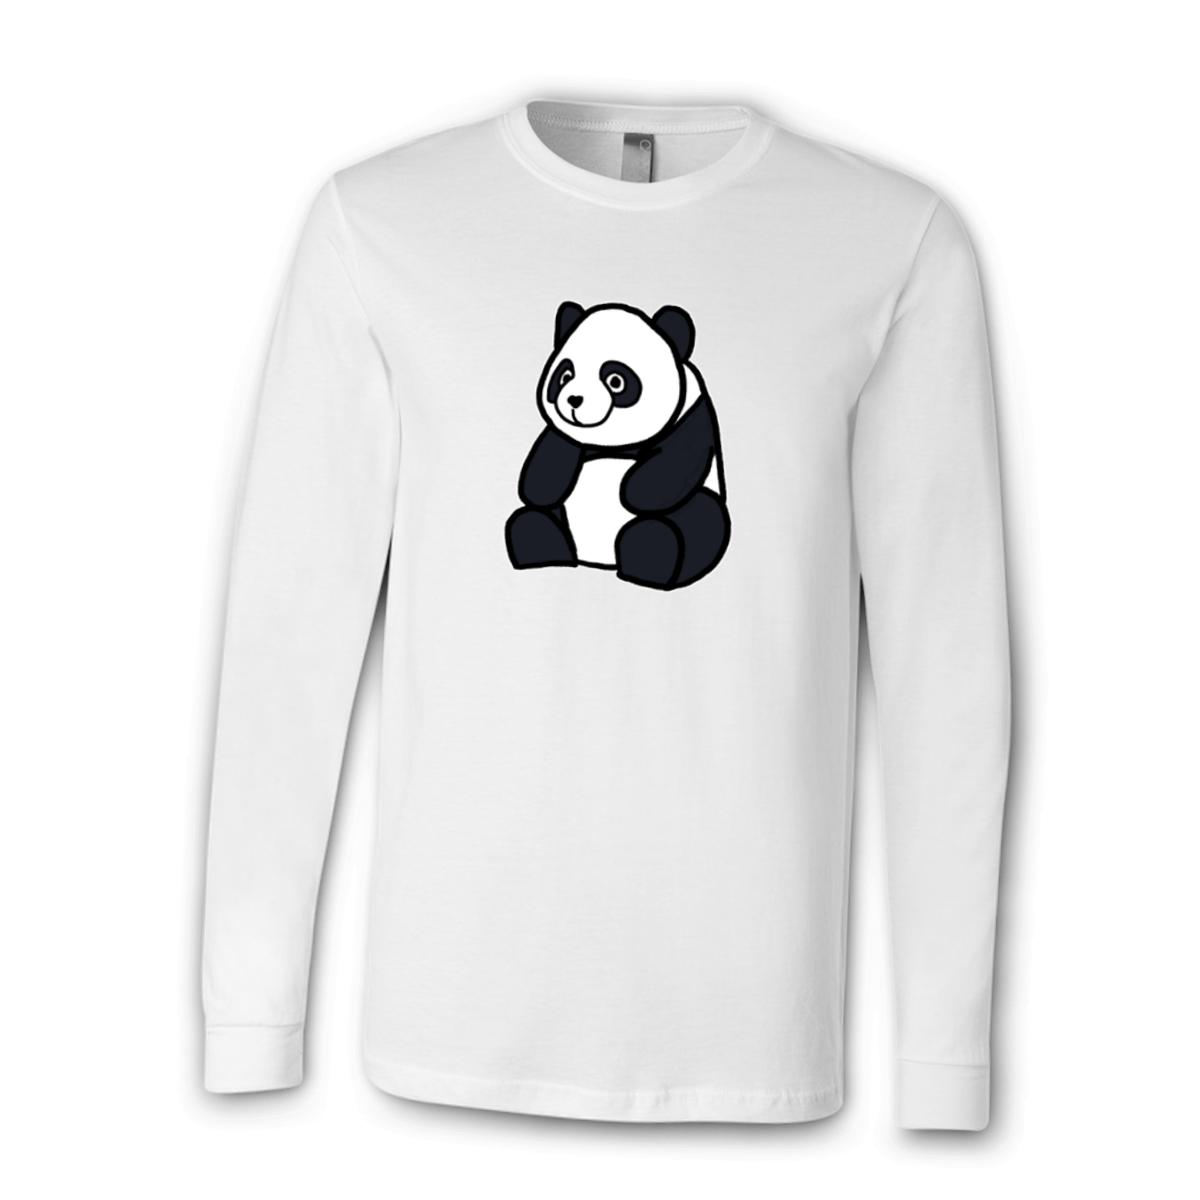 Panda Unisex Long Sleeve Tee Small white